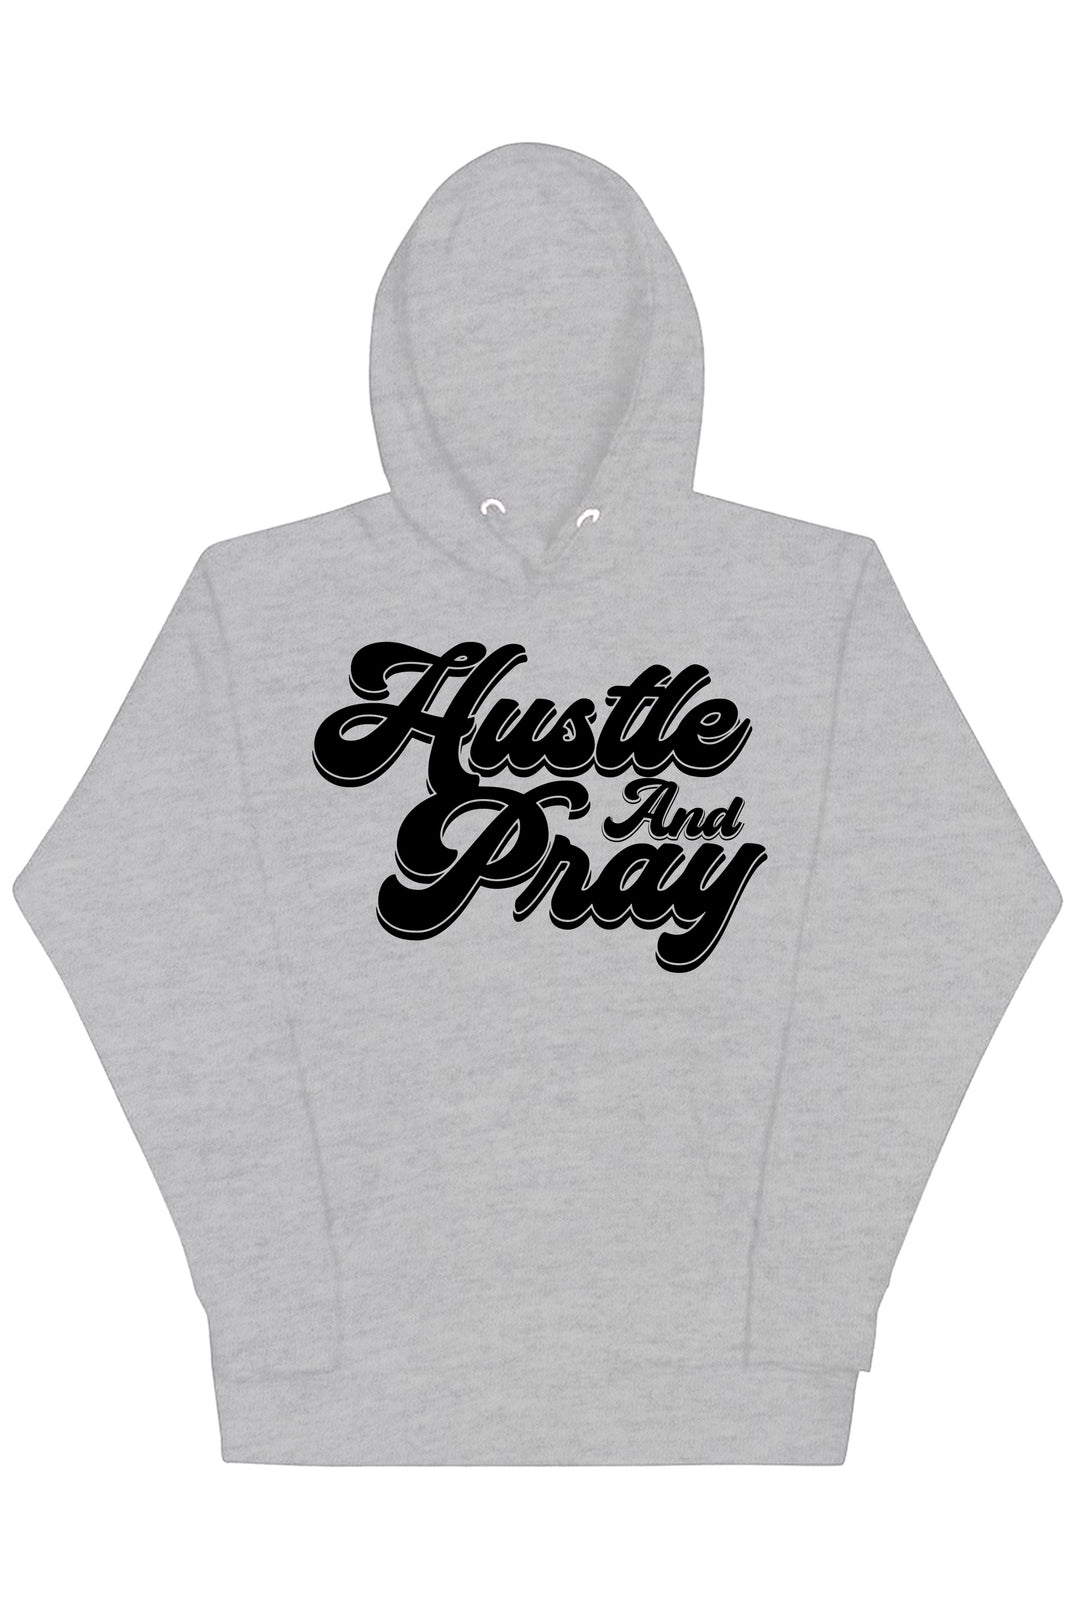 Hustle And Pray Hoodie (Black Logo) - Zamage